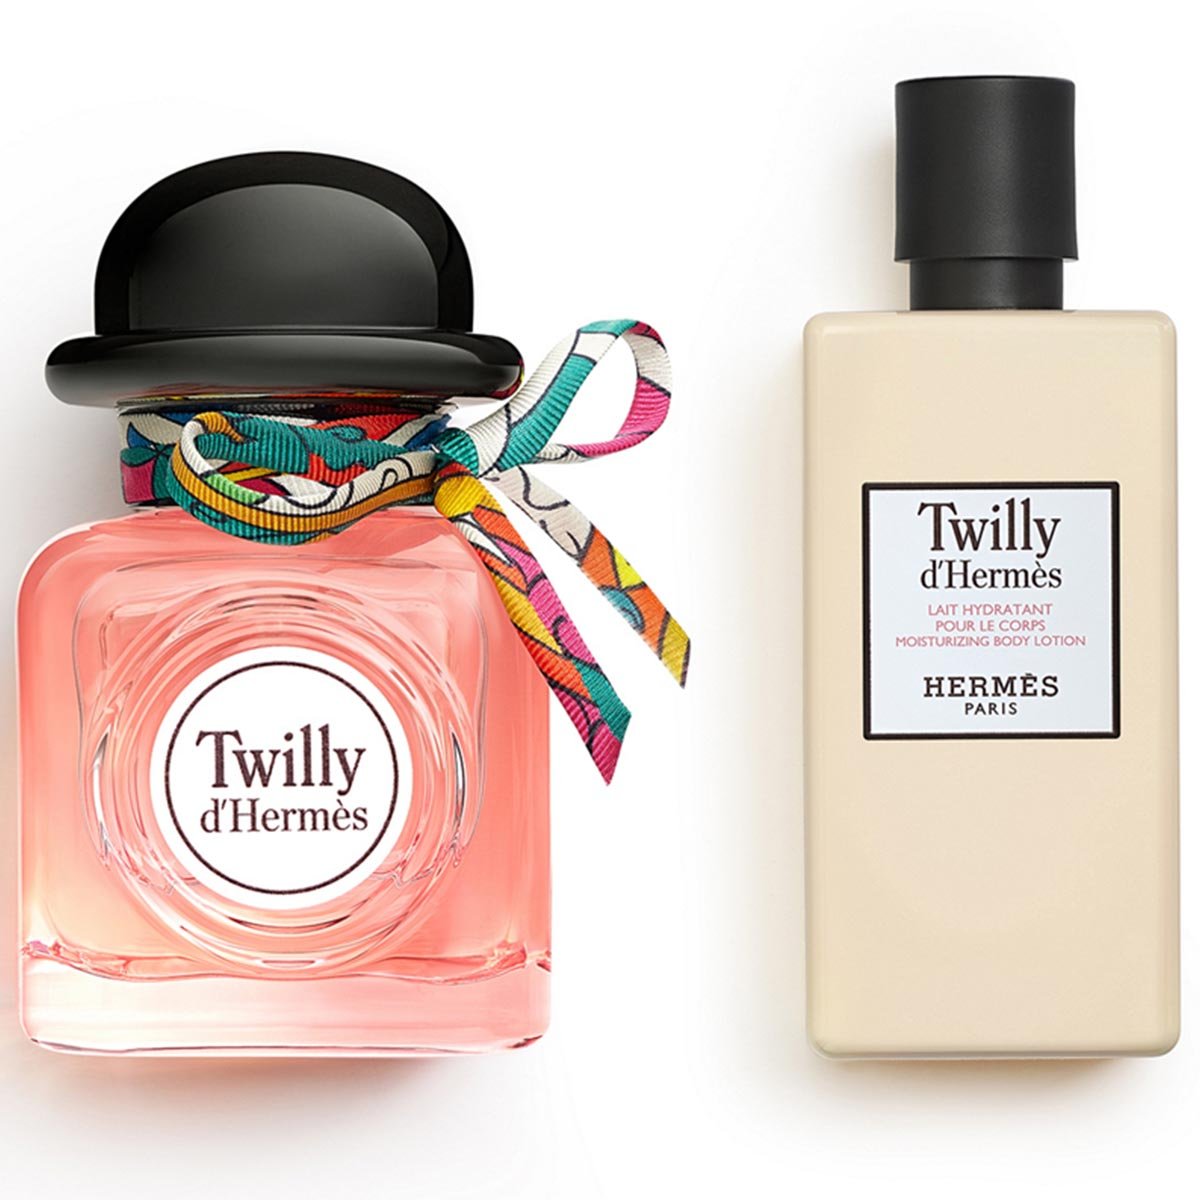 HERMÈS Twilly d'Hermes Body Lotion Gift Set - My Perfume Shop Australia